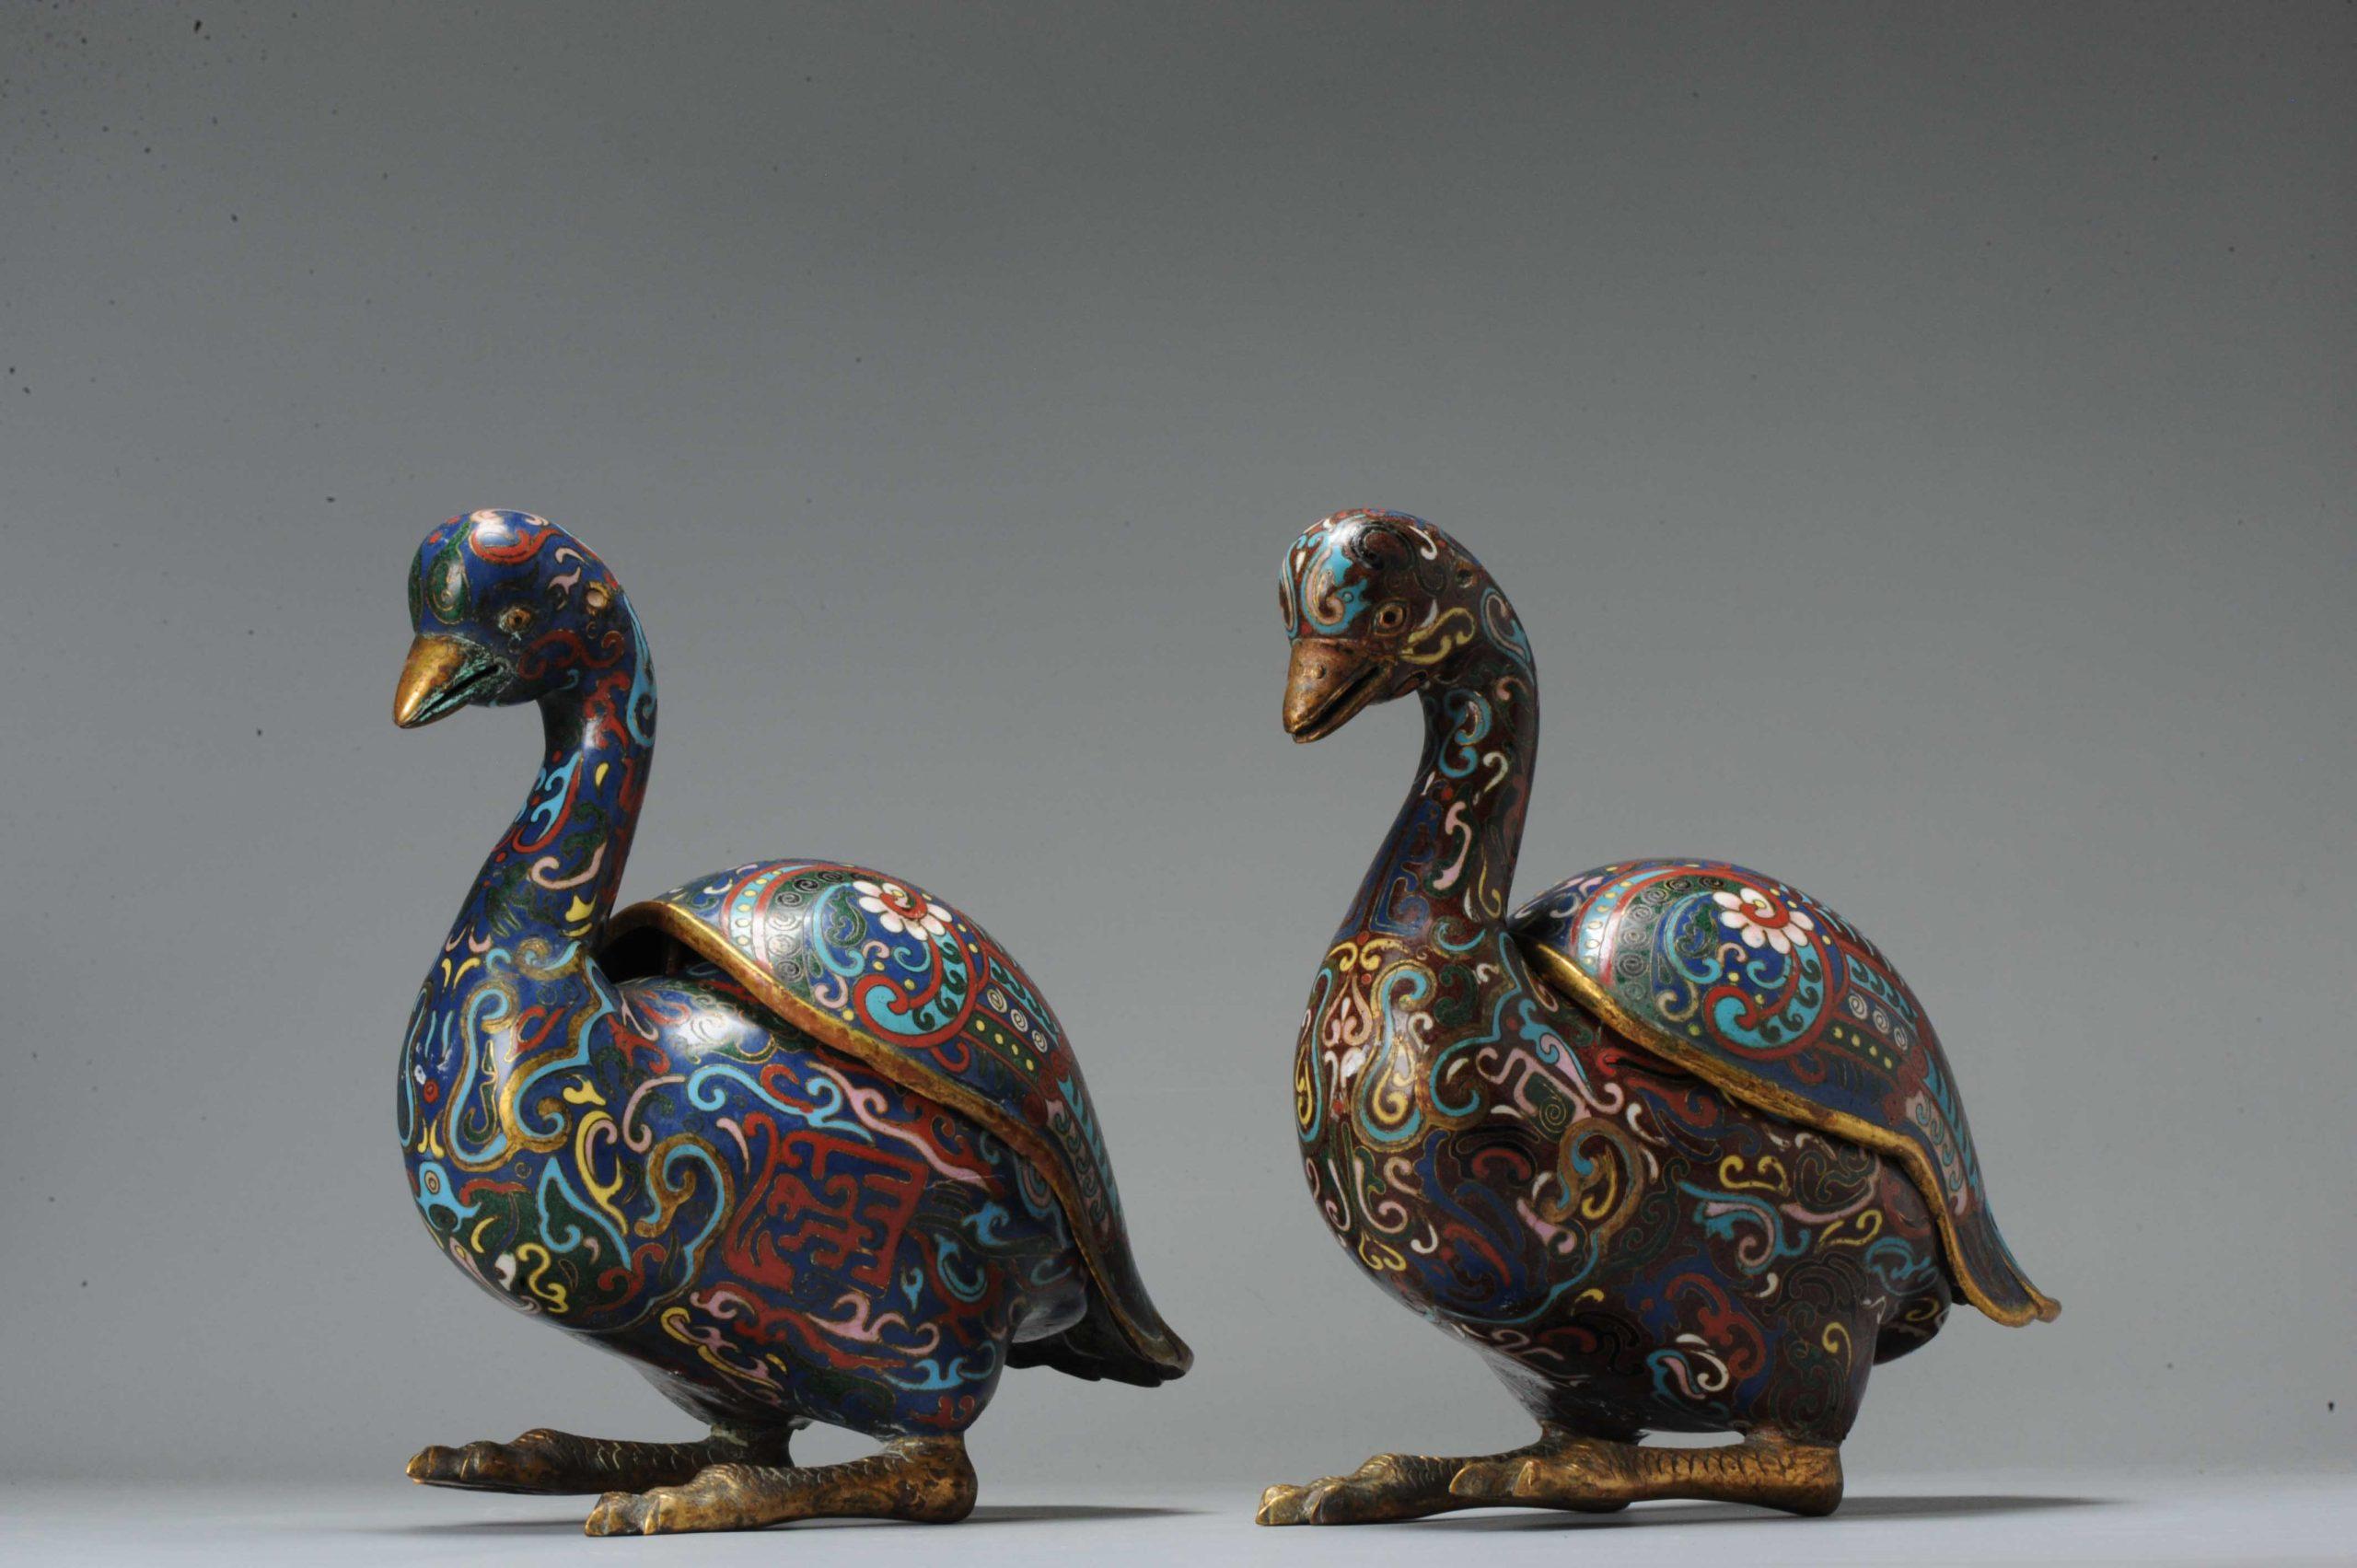 Antique Bronze / Copper Cloisonné Burner Inscense Koro Geese or Swan For Sale 2